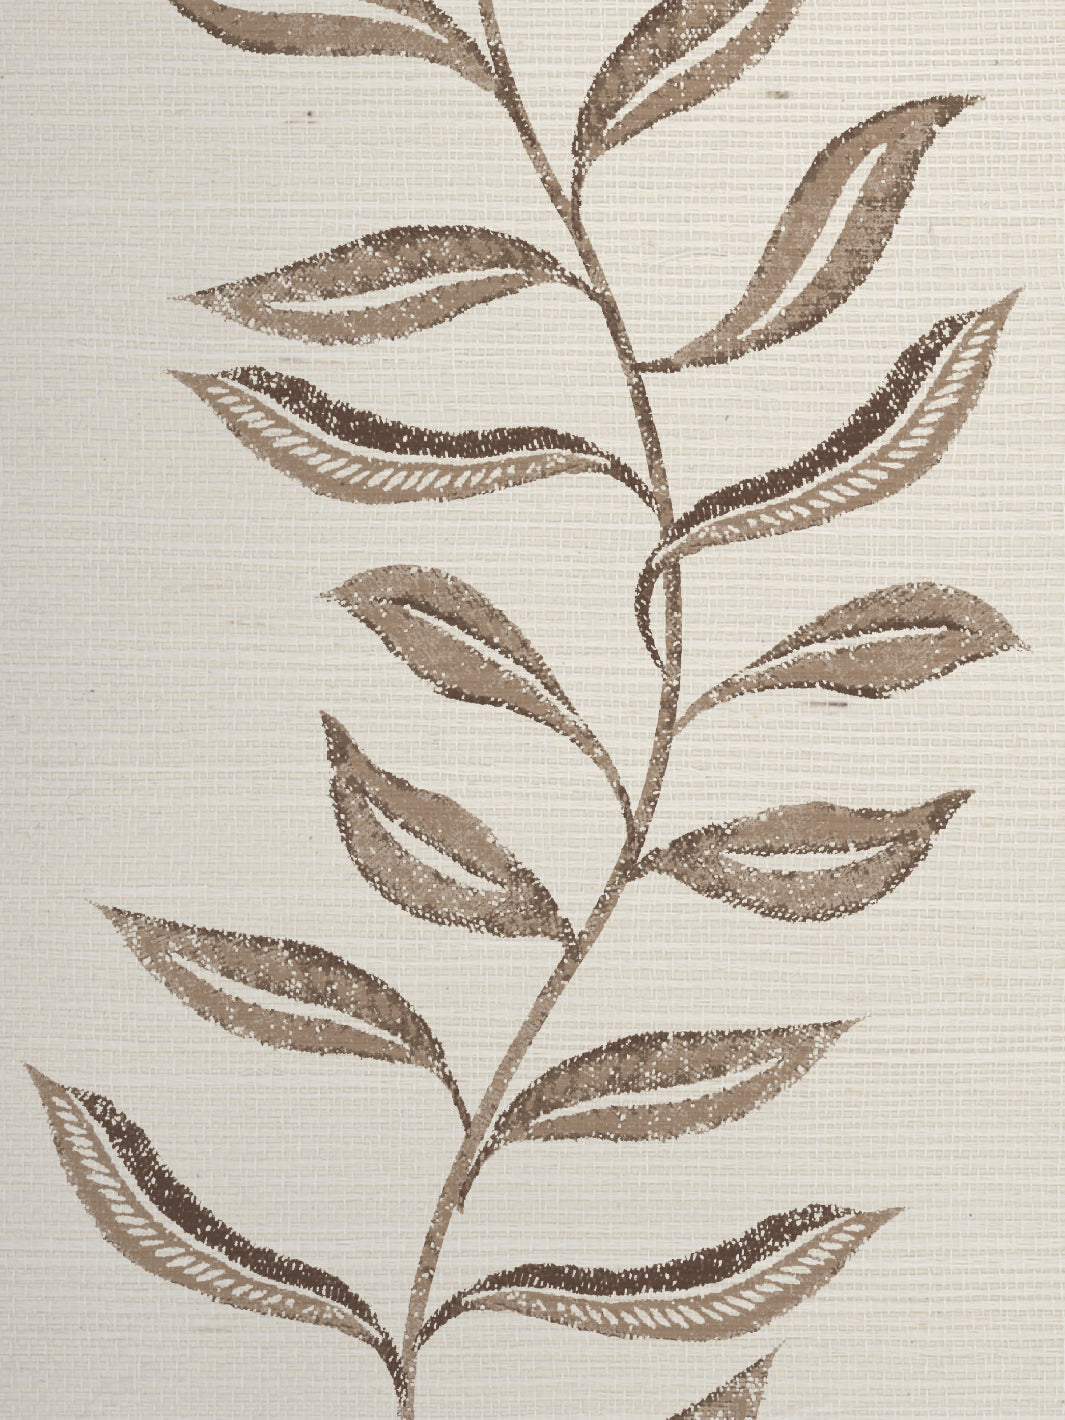 'Seneca' Grasscloth Wallpaper by Nathan Turner - Brown